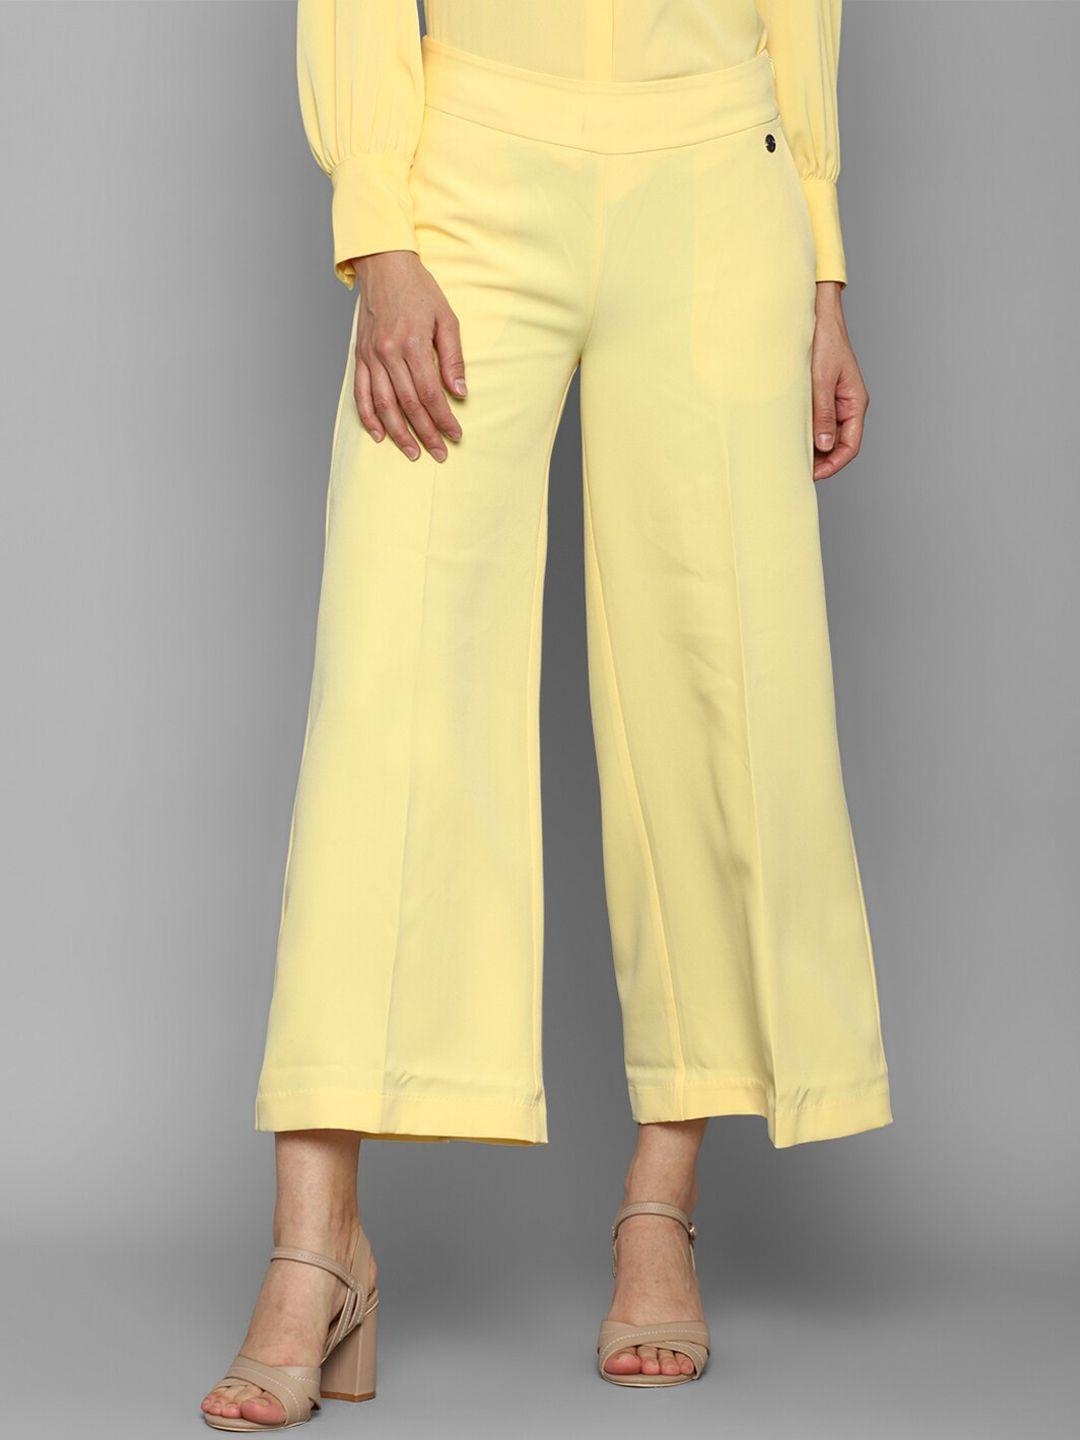 allen-solly-woman-women-yellow-culottes-trousers